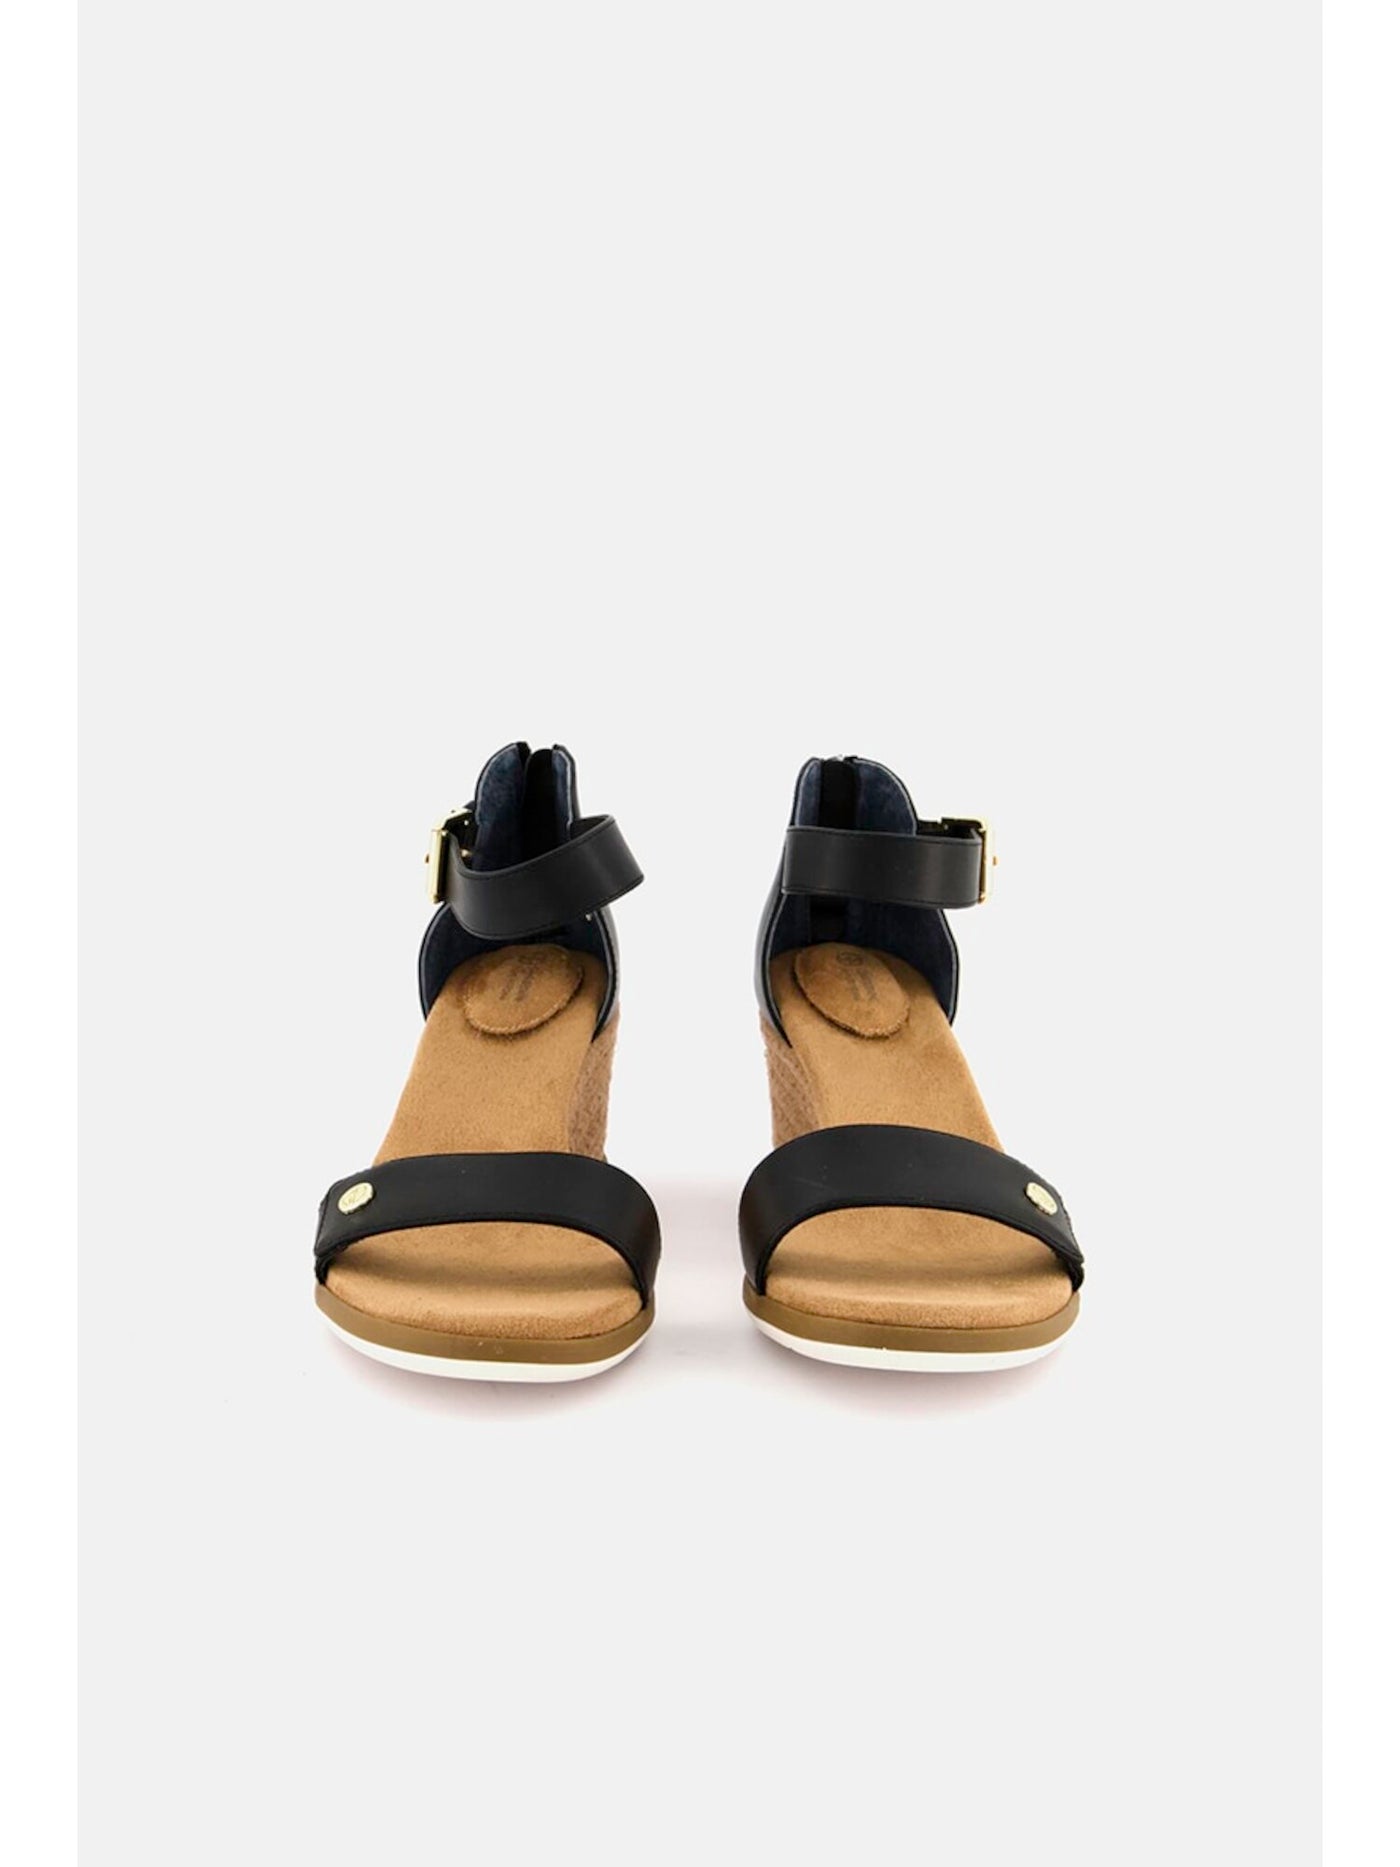 GIANI BERNINI Womens Black Buckle Accent Cushioned Daytonn Almond Toe Wedge Zip-Up Espadrille Shoes 5.5 M